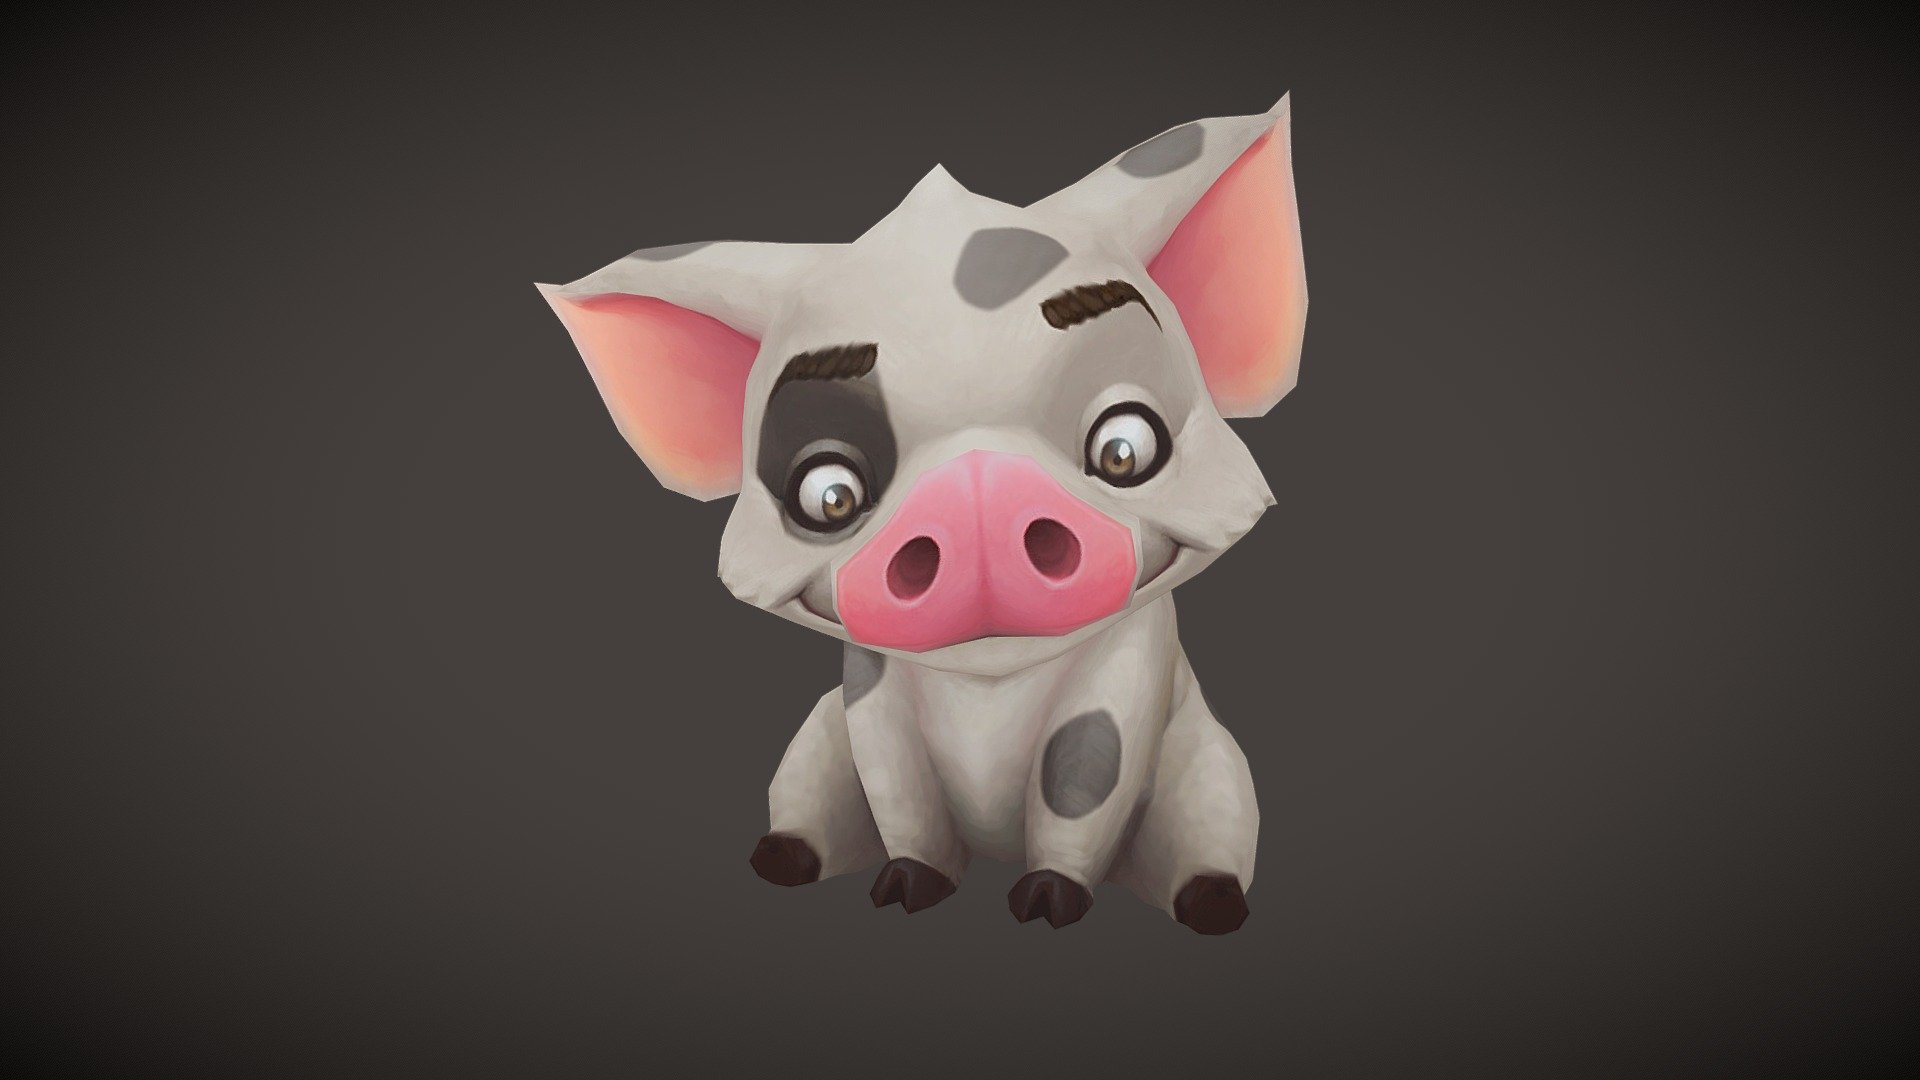 Pig from Moana fanart, just a quick hand-painted fan art 3d model